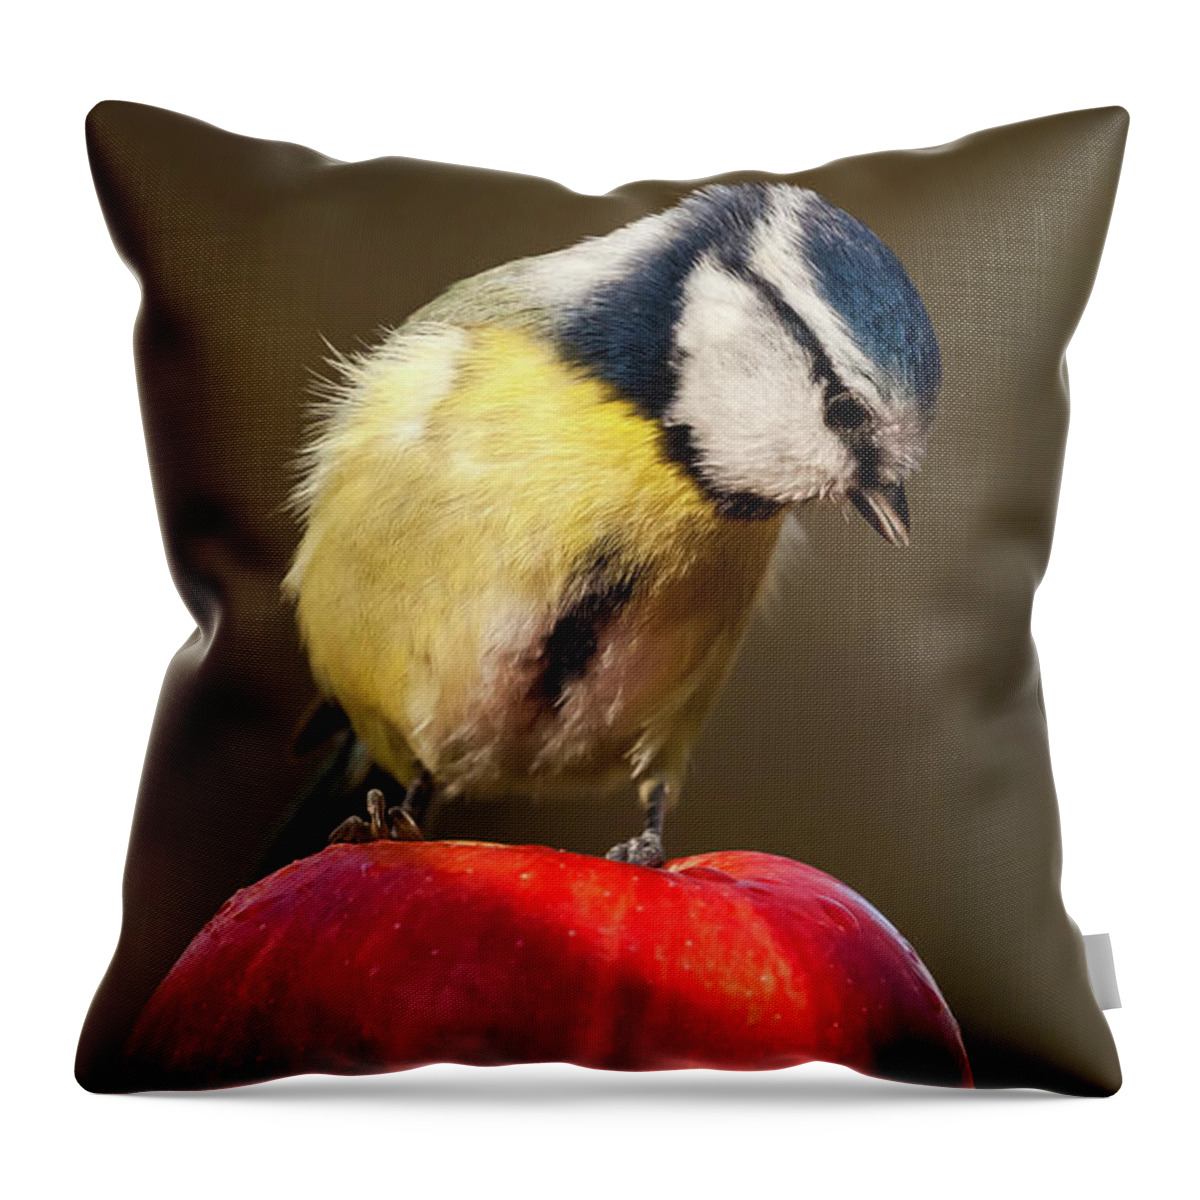 Bird Throw Pillow featuring the photograph Blue Tit Cyanistes caeruleus sat on a red apple looking down by Simon Bratt